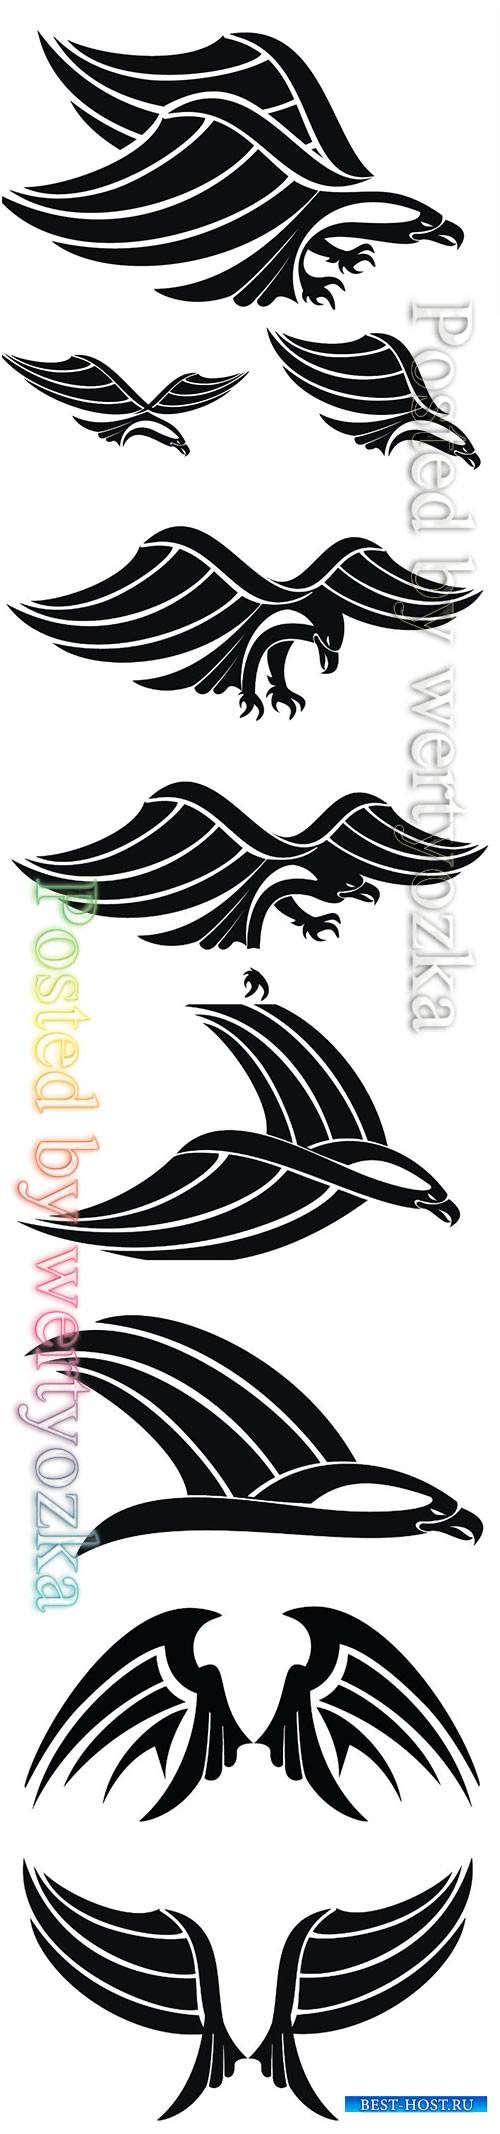 Eagle logos vector illustration